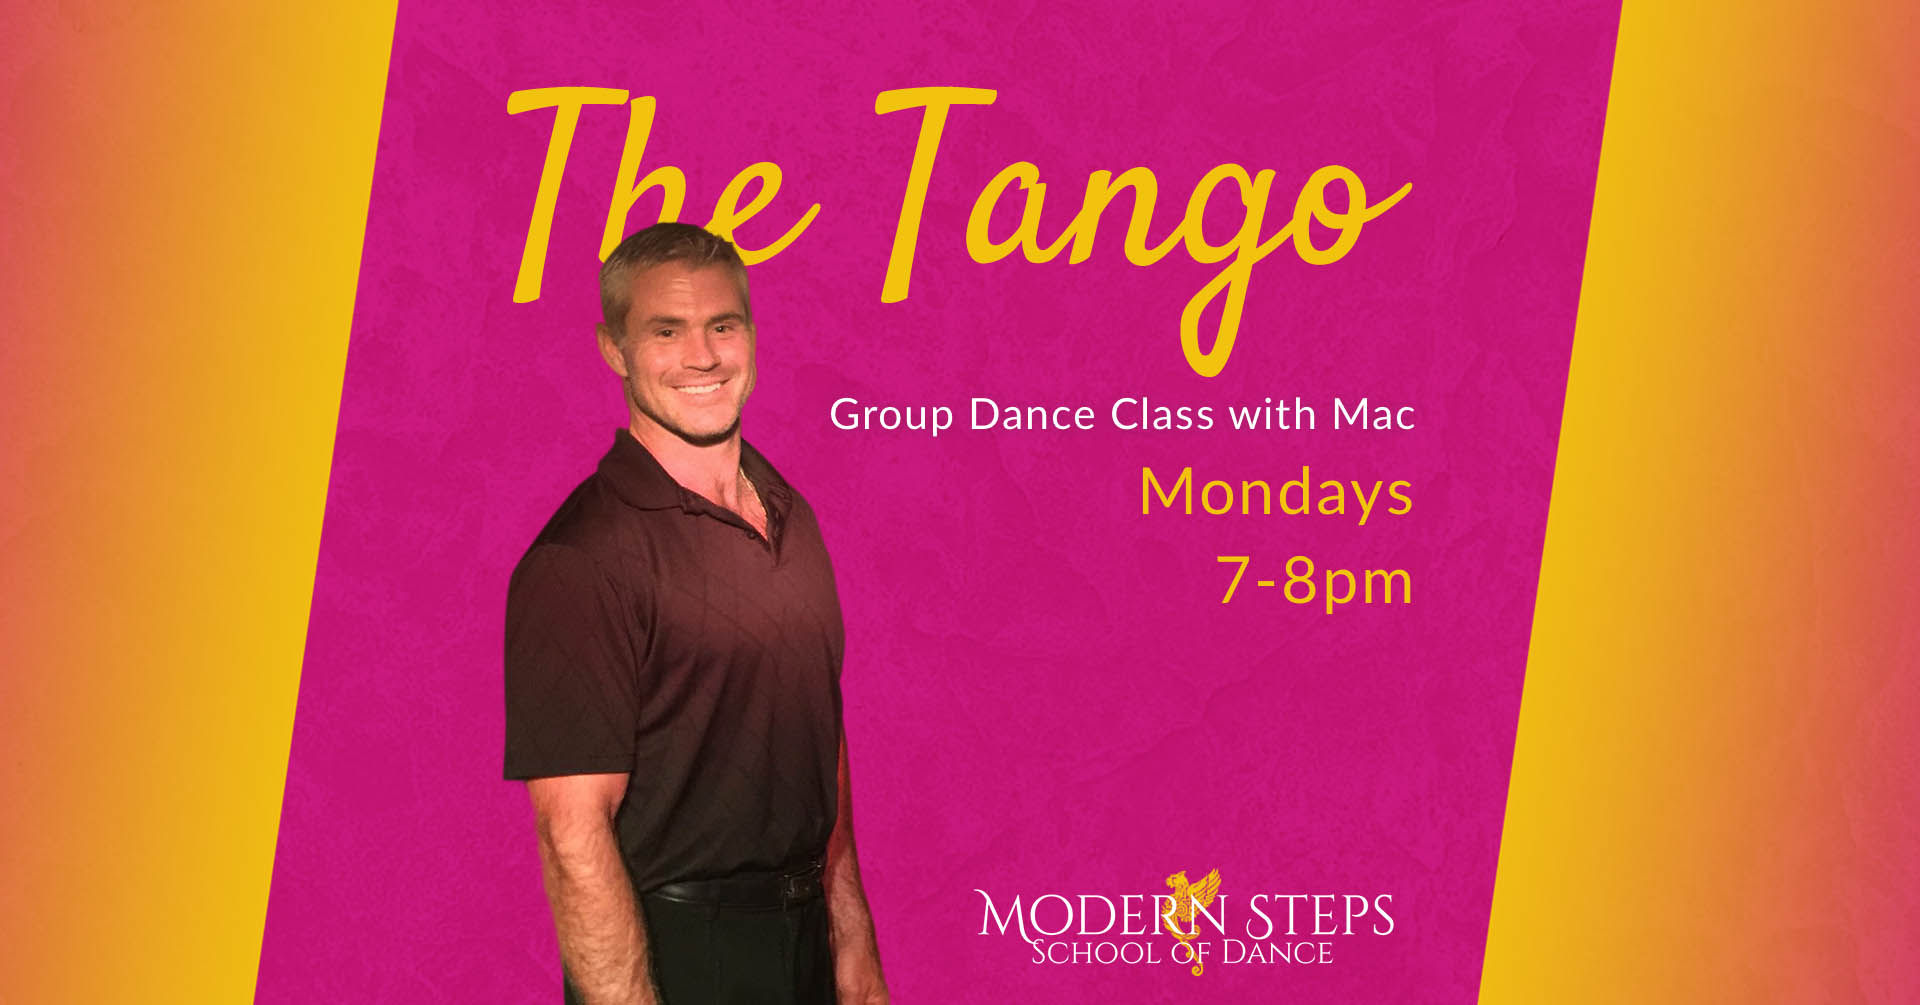 Modern Steps School of Dance Naples Florida Tango Dancing Dance Classes - Group Ballroom Dance Lessons - Naples Florida Things to Do